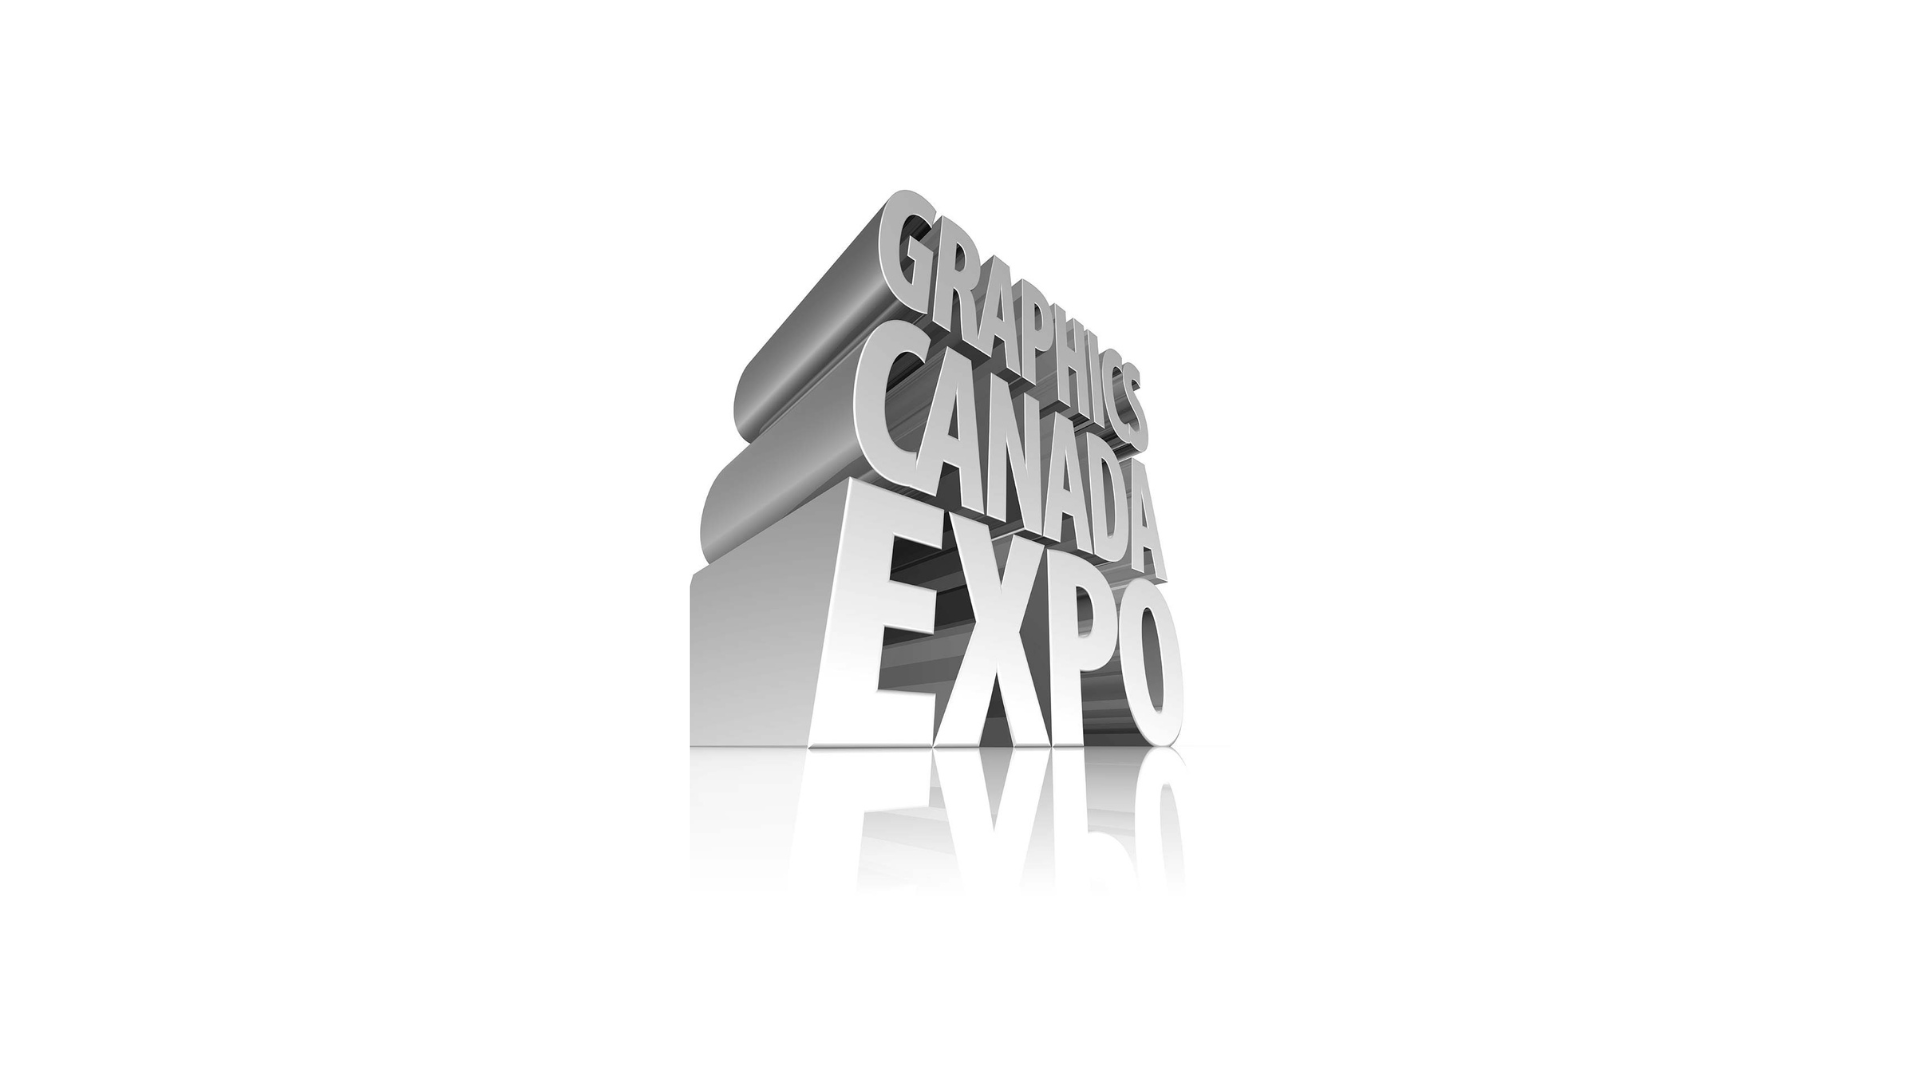 Graphics Canada expo